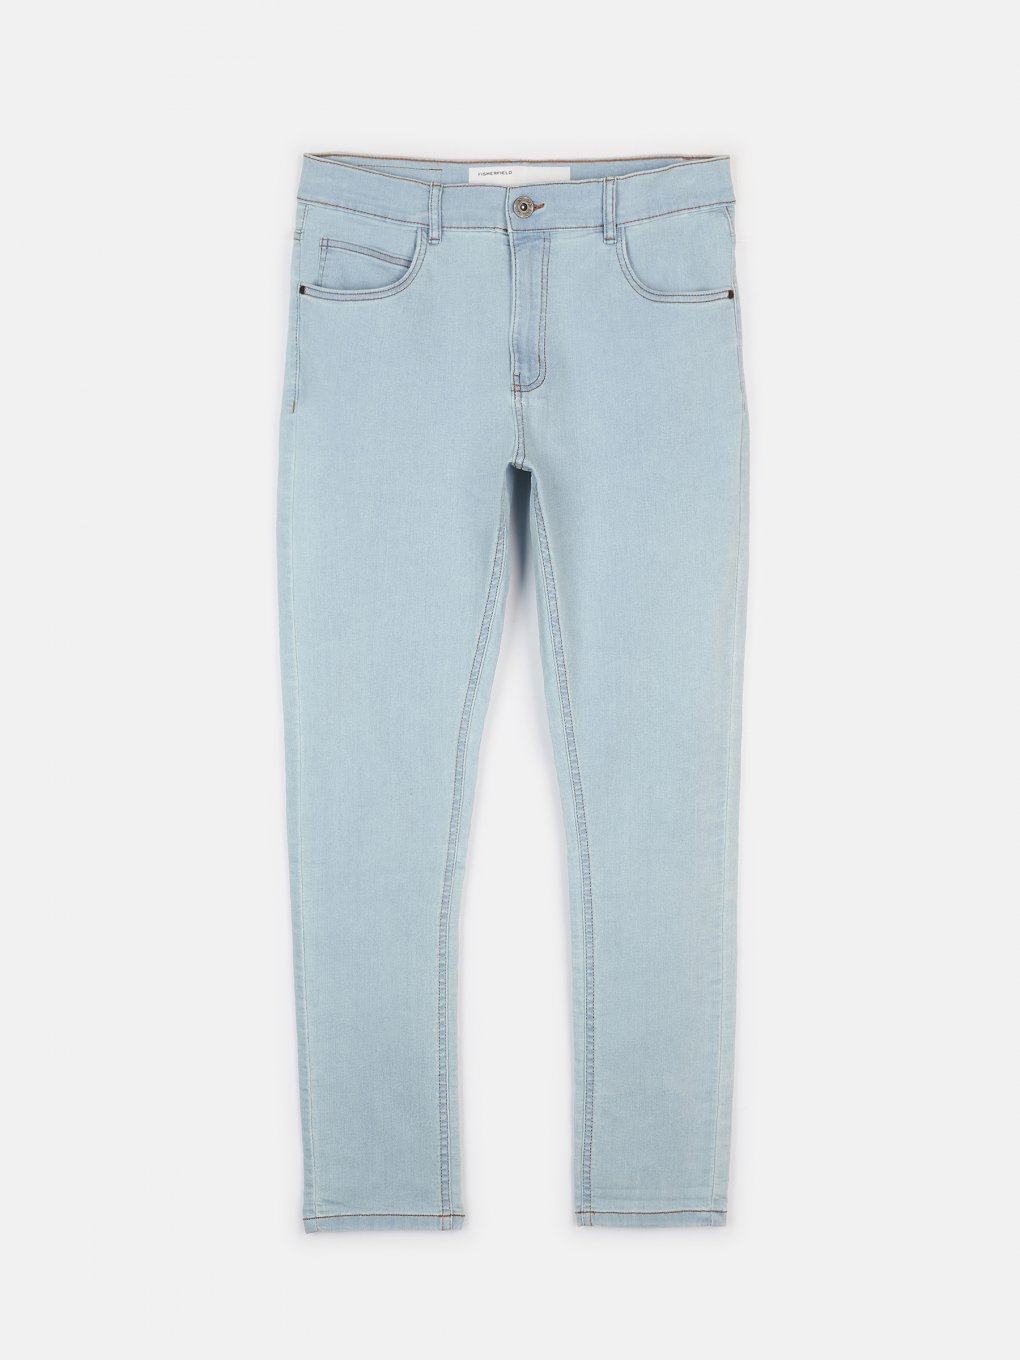 Basic slim fit jeans